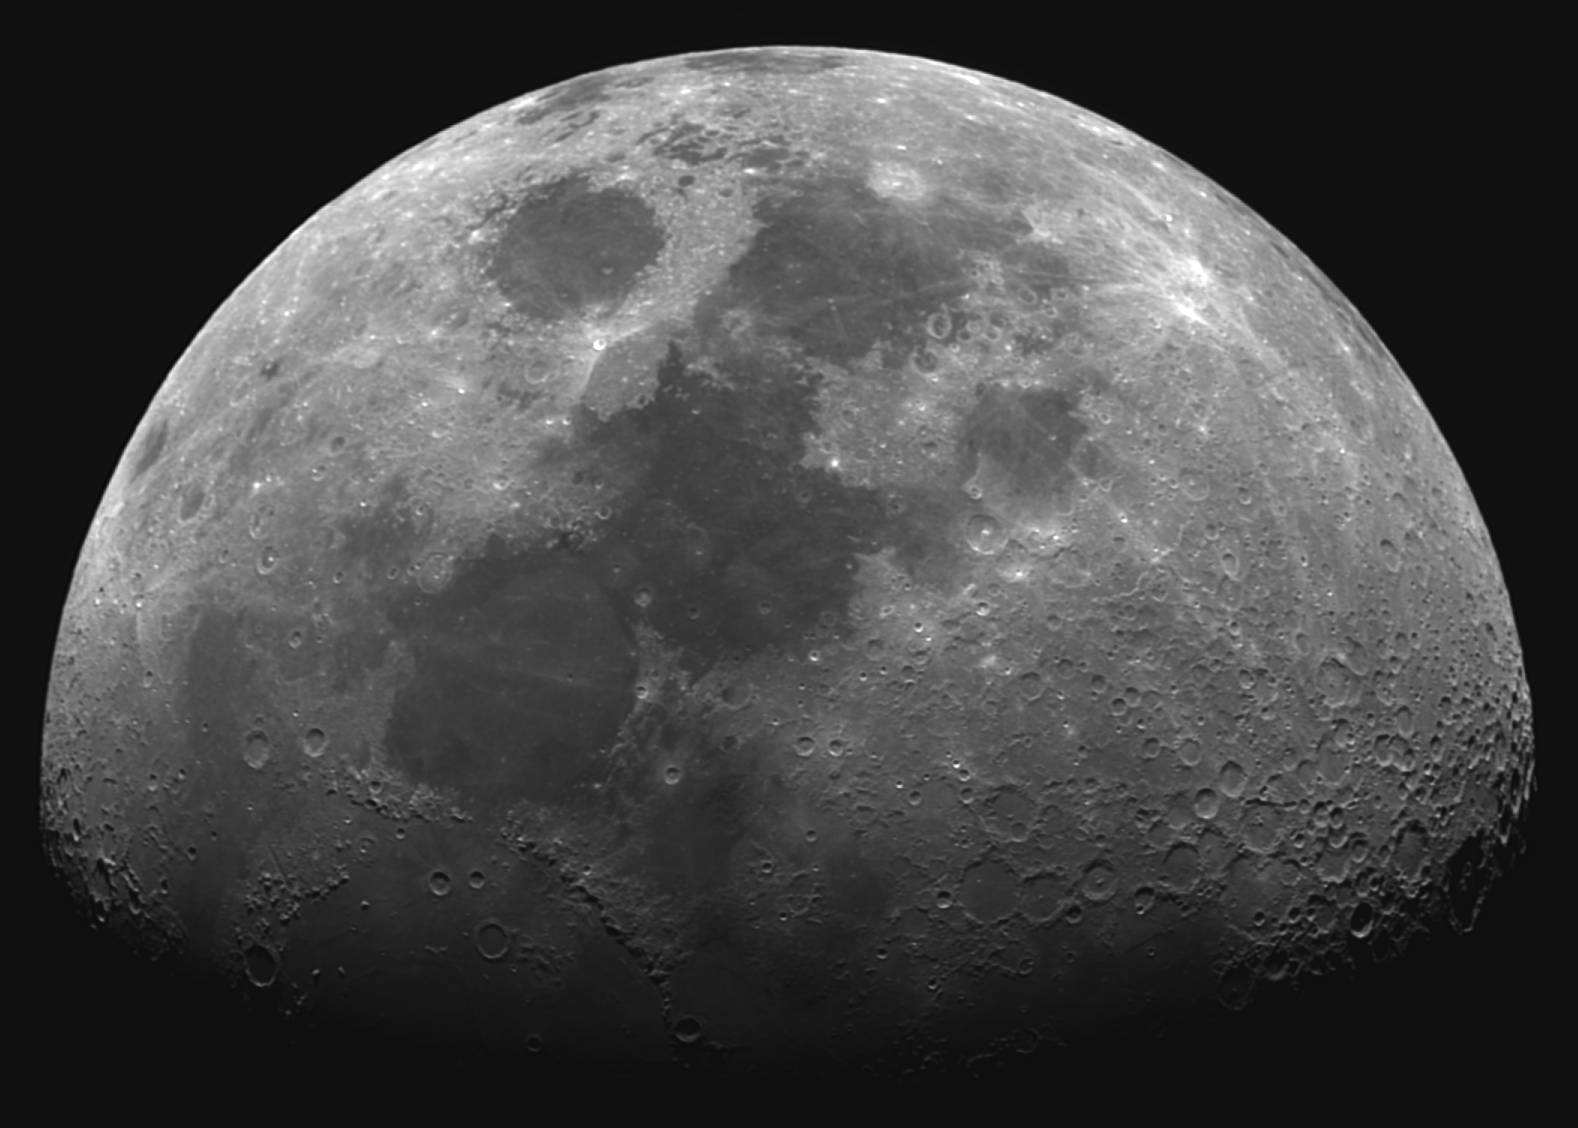 Moon_2021-12-12_ASI120MC_Clear_Affinity_Crop_Landscape_Channel-Mixer-Minus-Blue_BW-Default_Unsharp-Mask-1.5-3.035-0_Exposure-1-stop.jpg